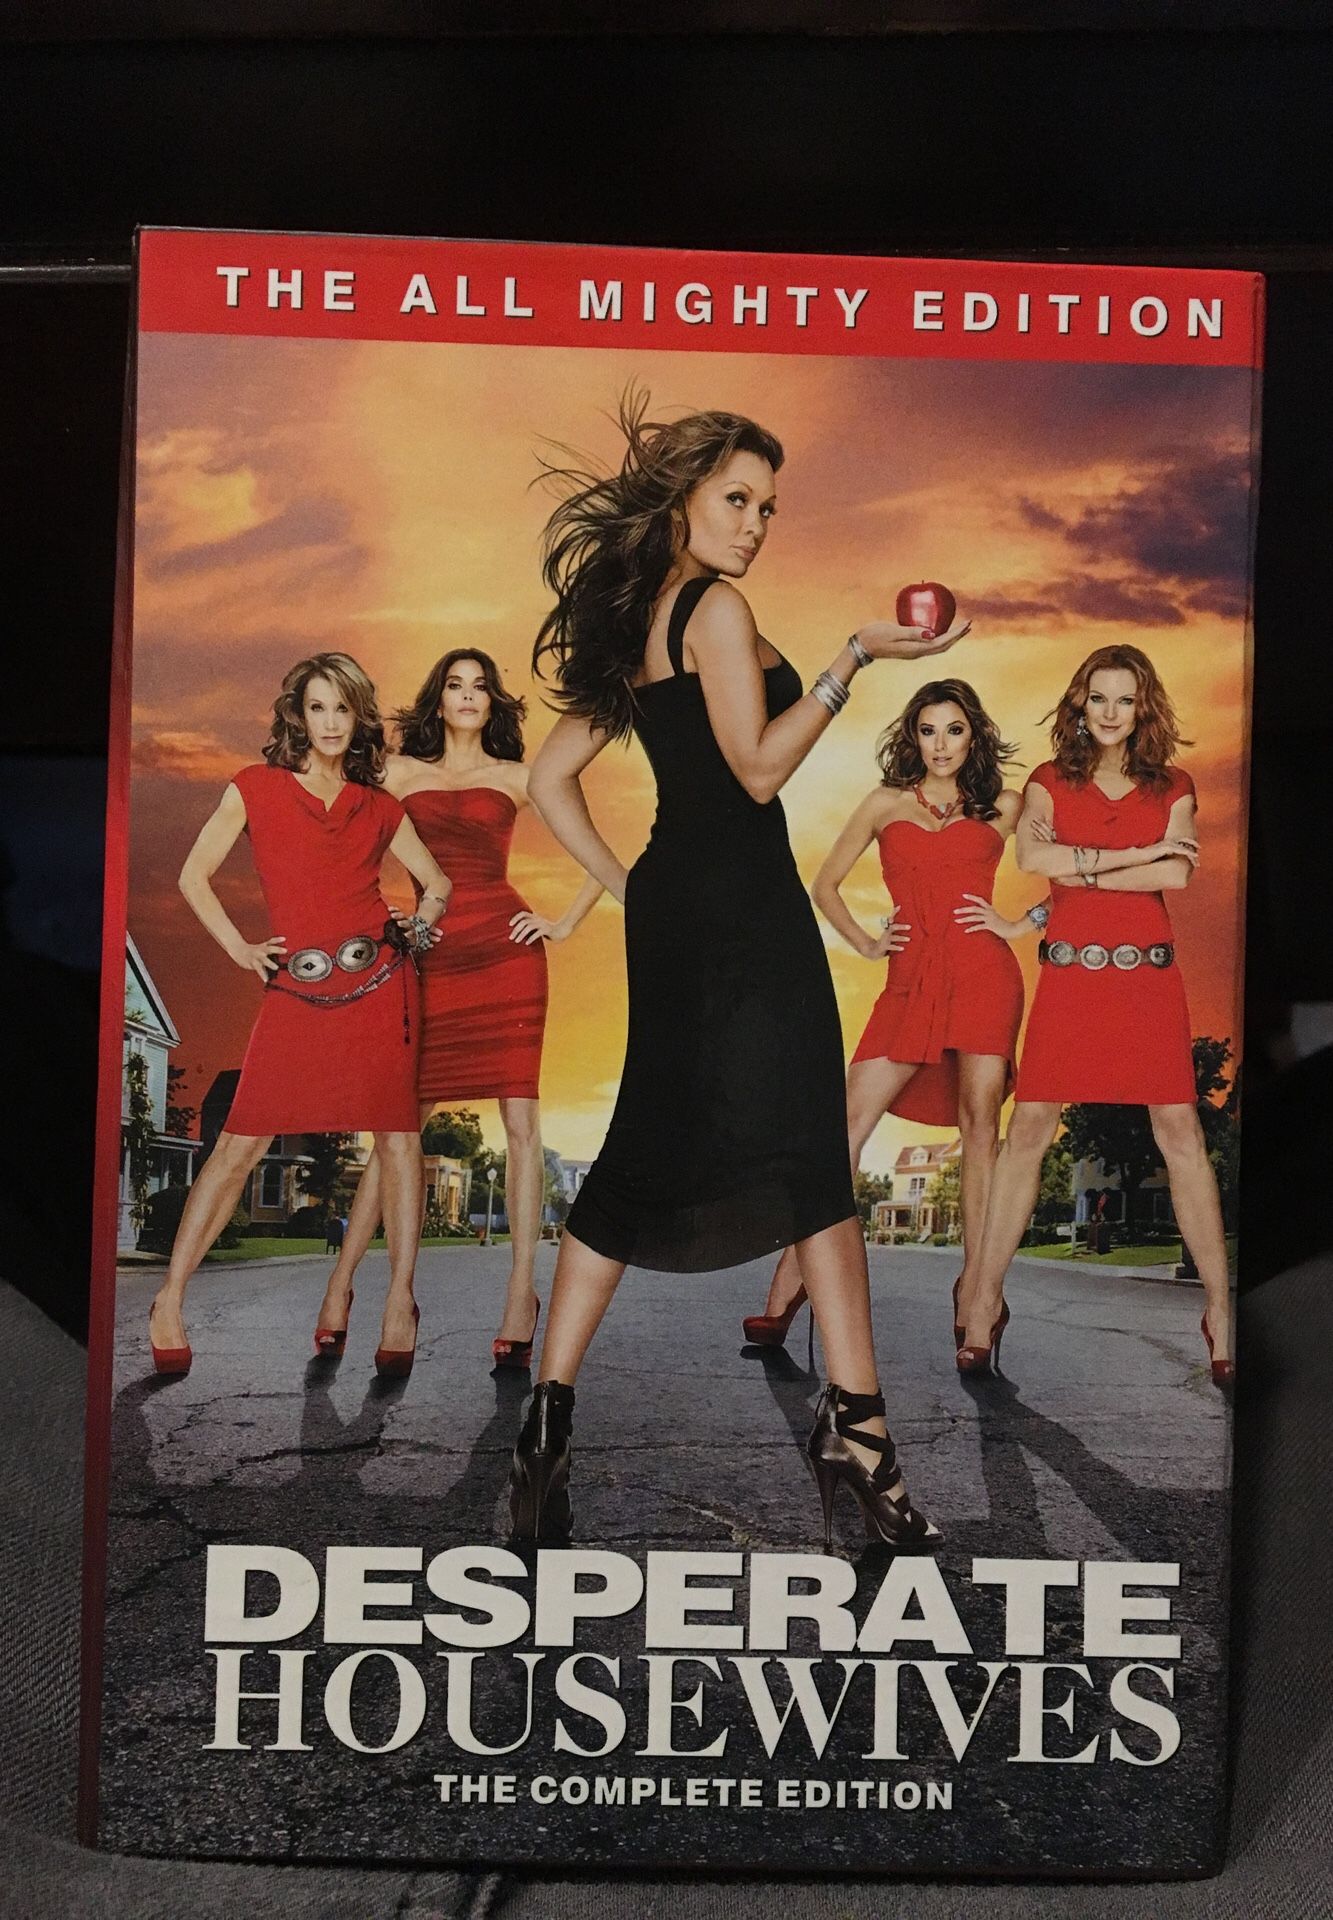 Desperate Housewives season 7